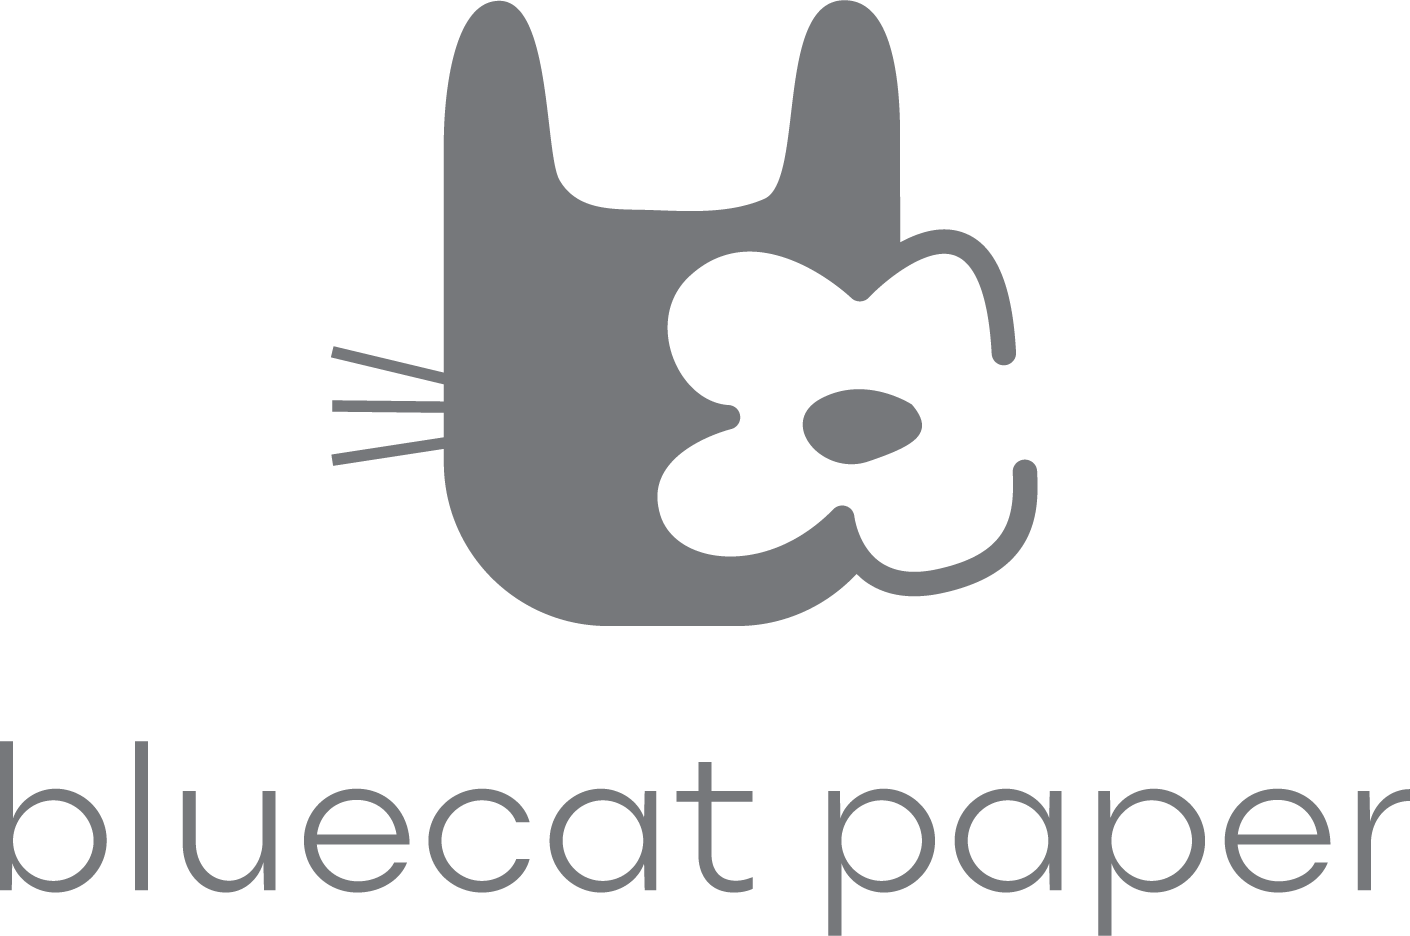 Bluecat Paper